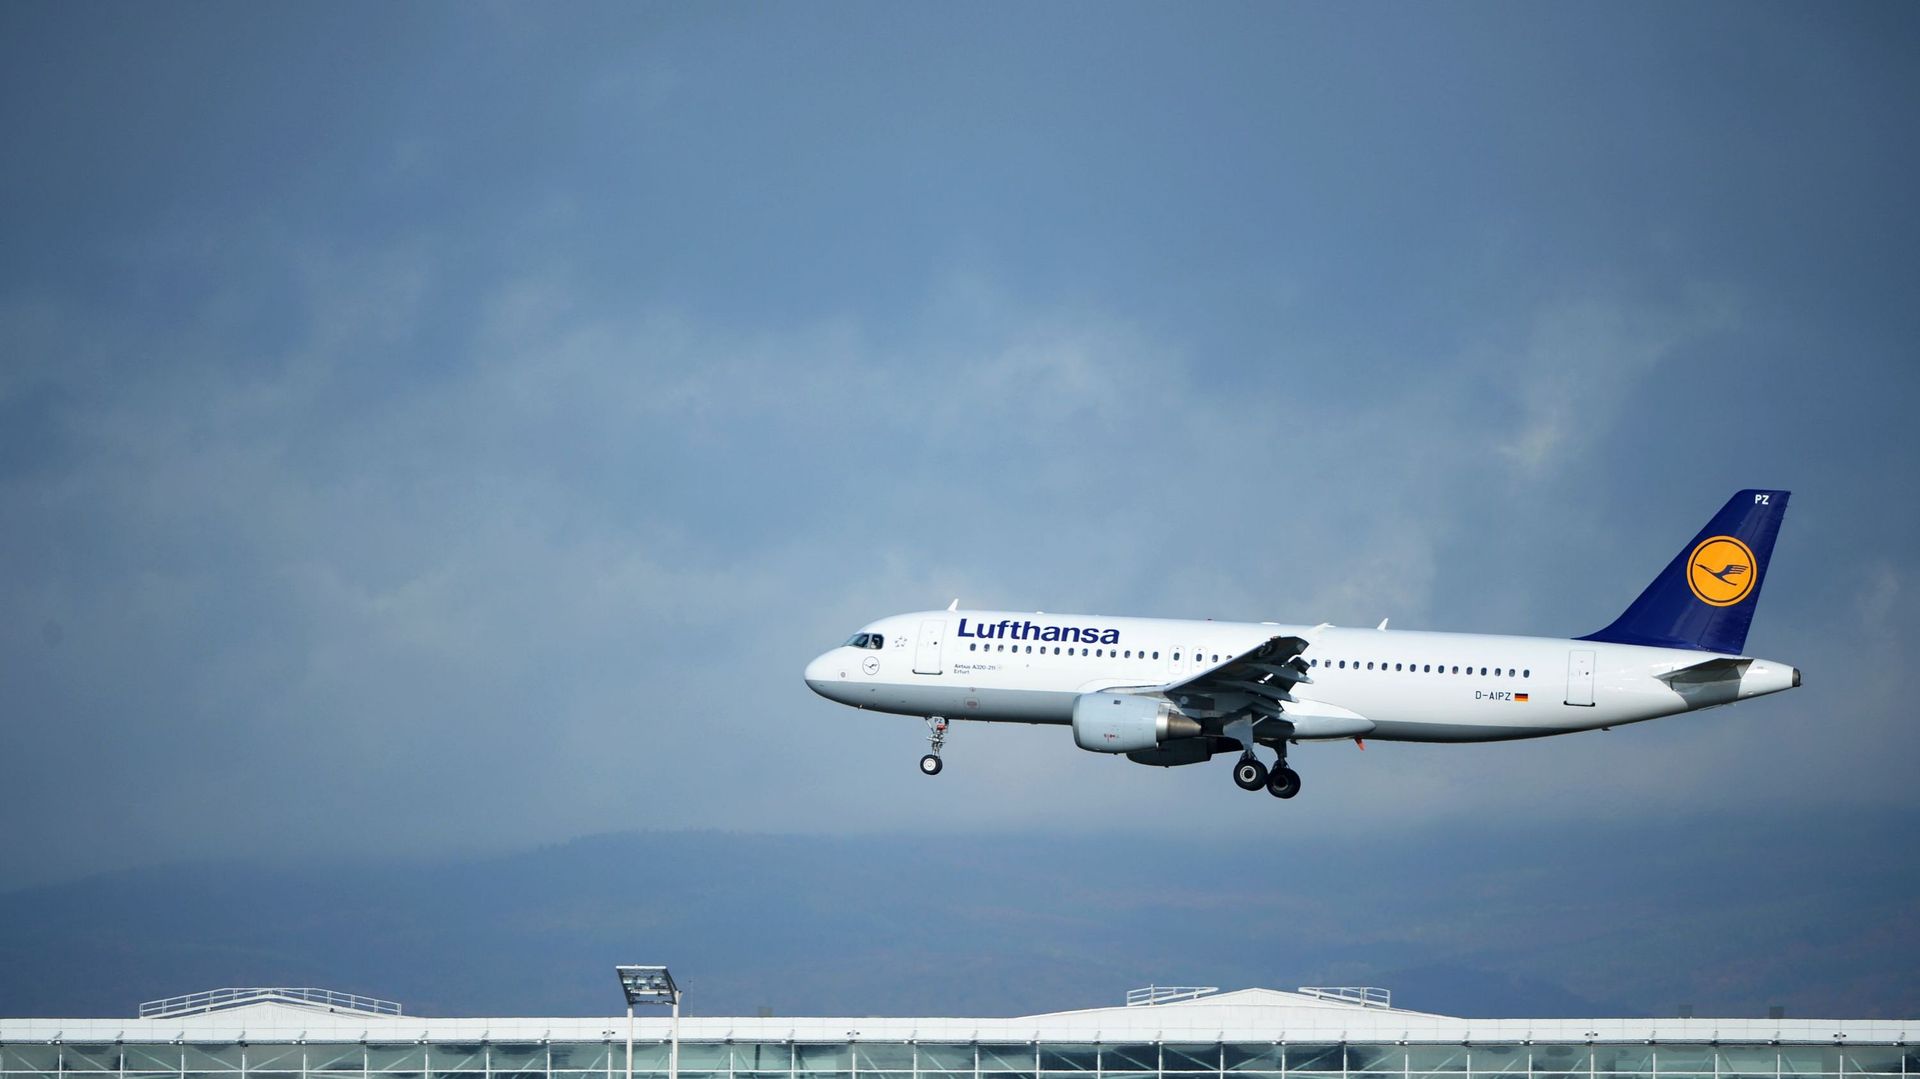 Grève des pilotes: Lufthansa supprime 876 vols mercredi